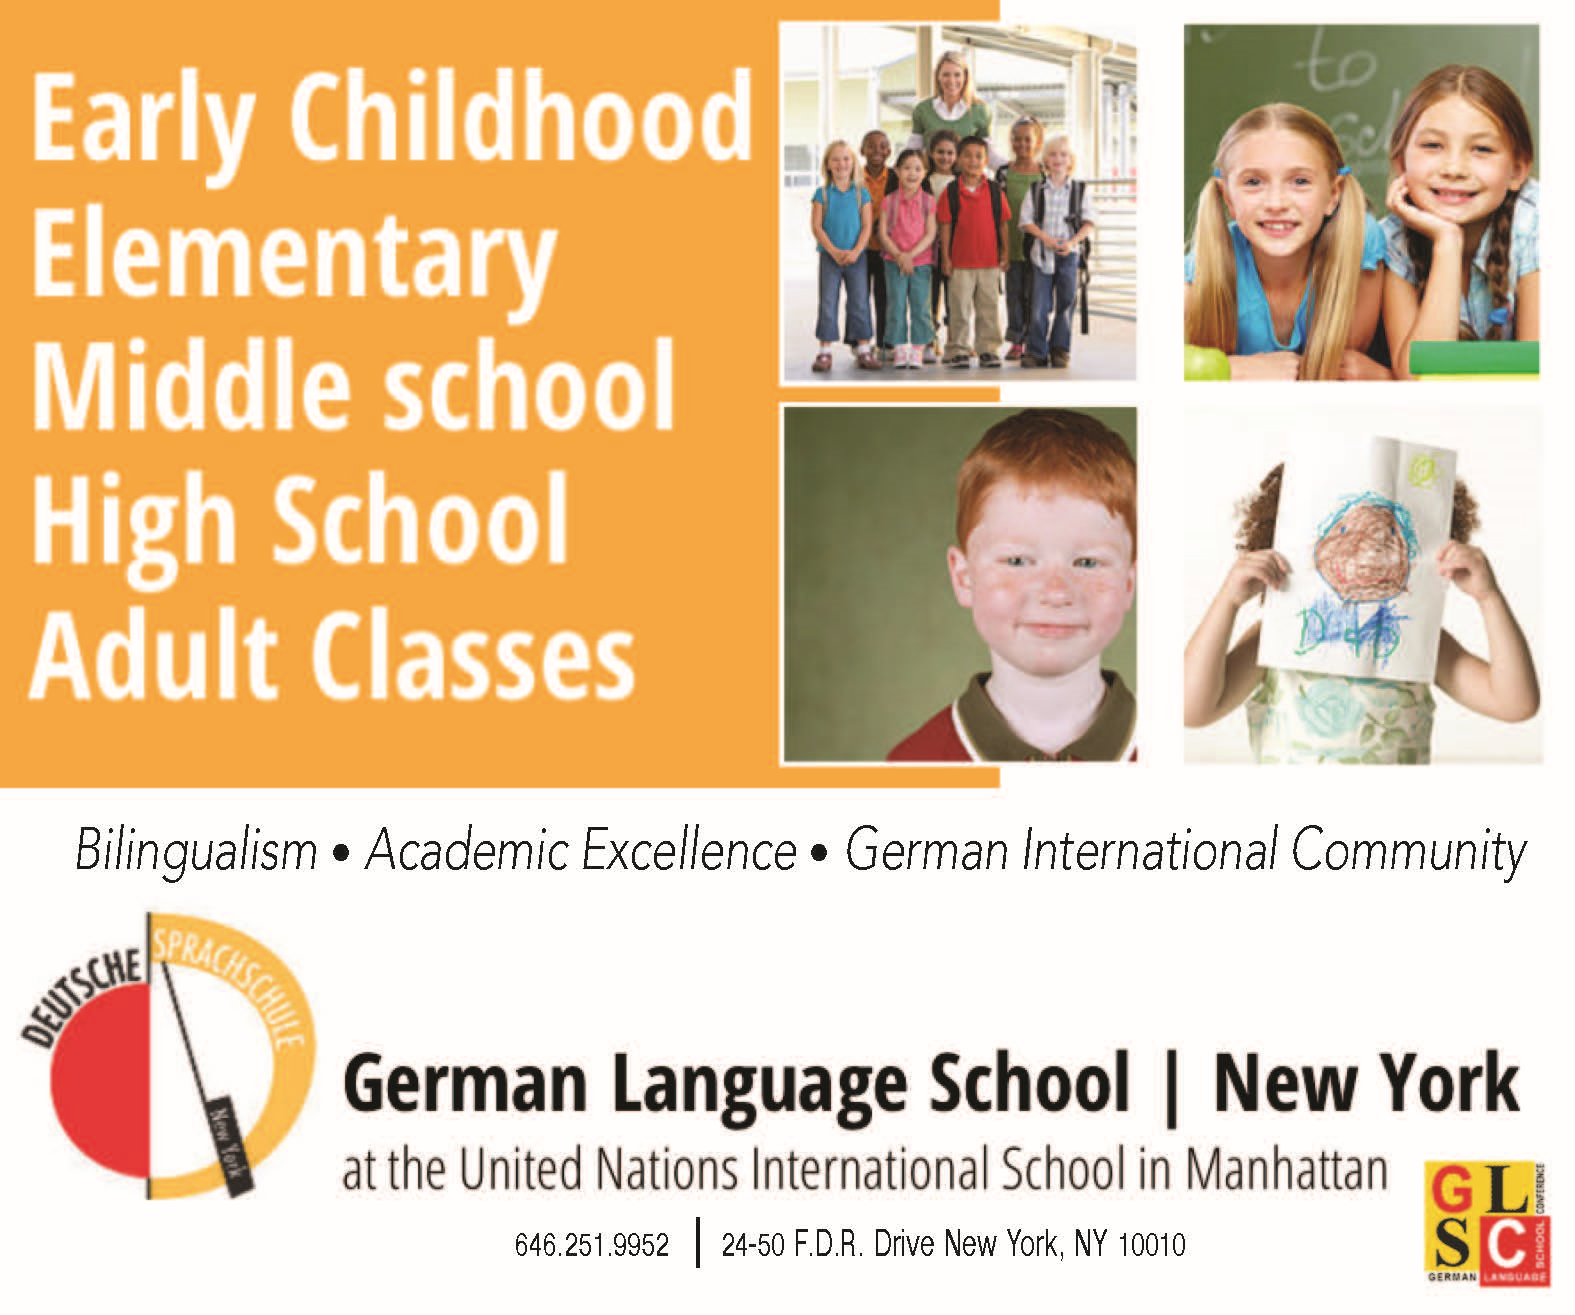 German Language School New York